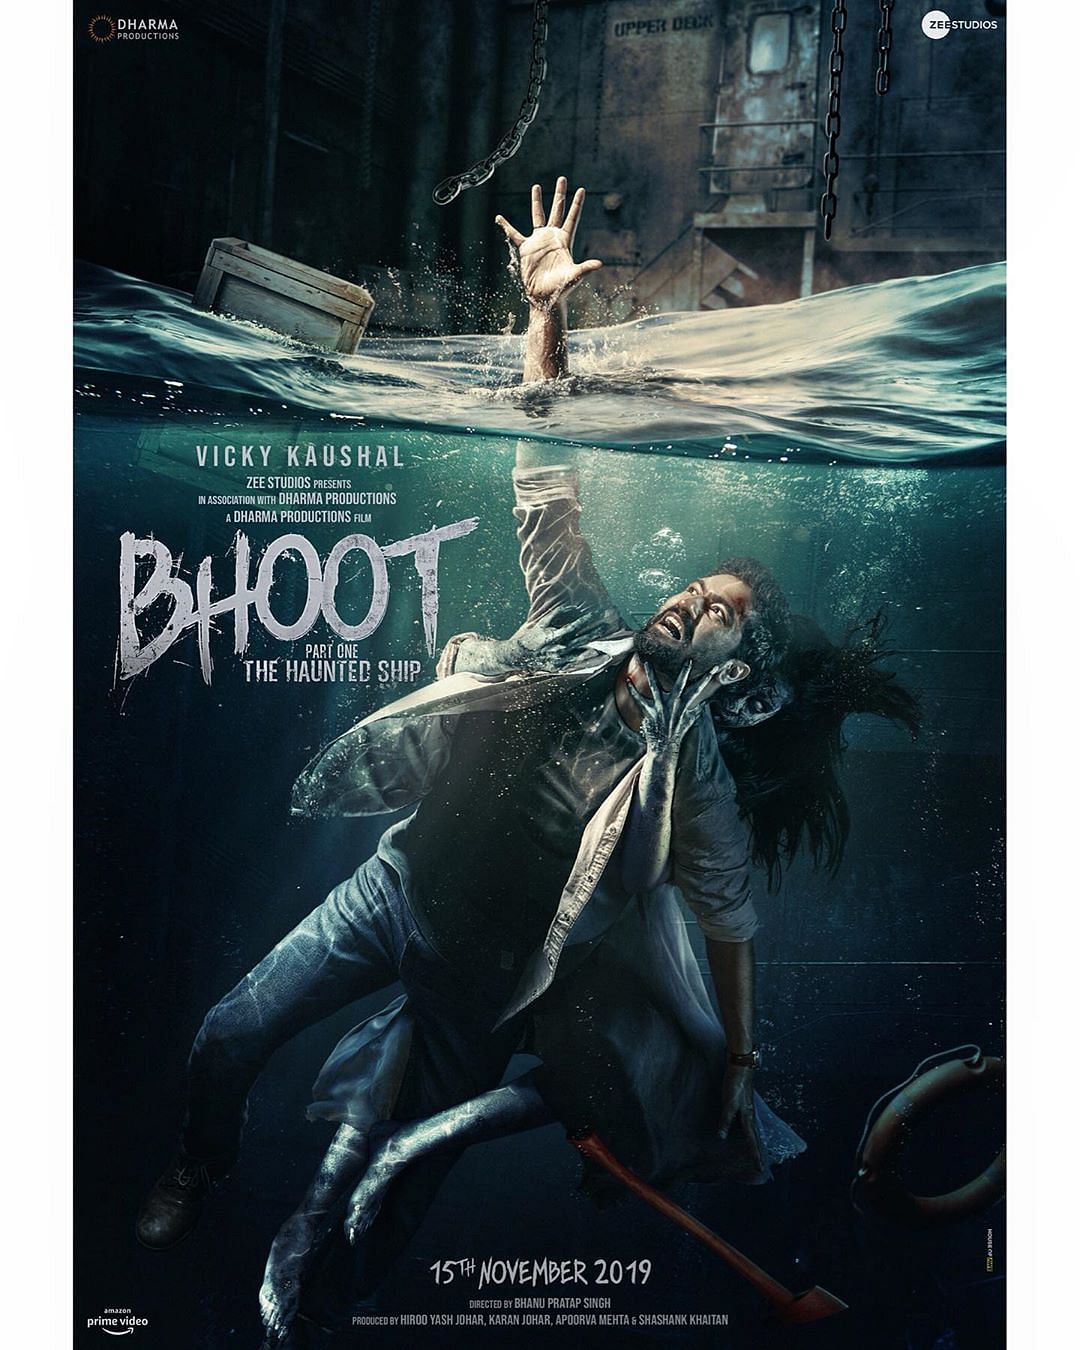 ‘Bhoot’ is directed by Bhanu Pratap Singh 